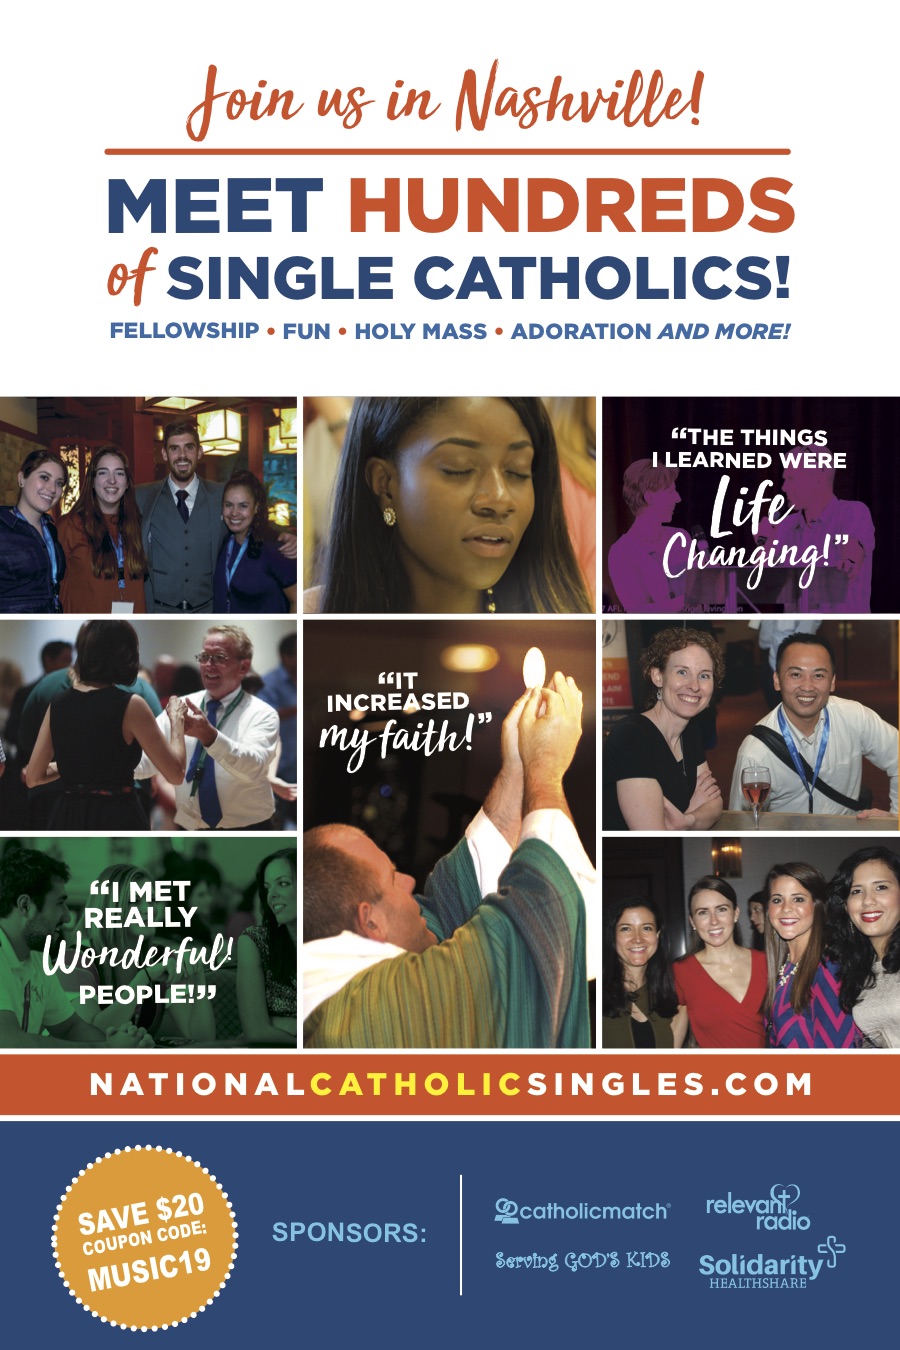 Share Us « National Conference for Single Catholics